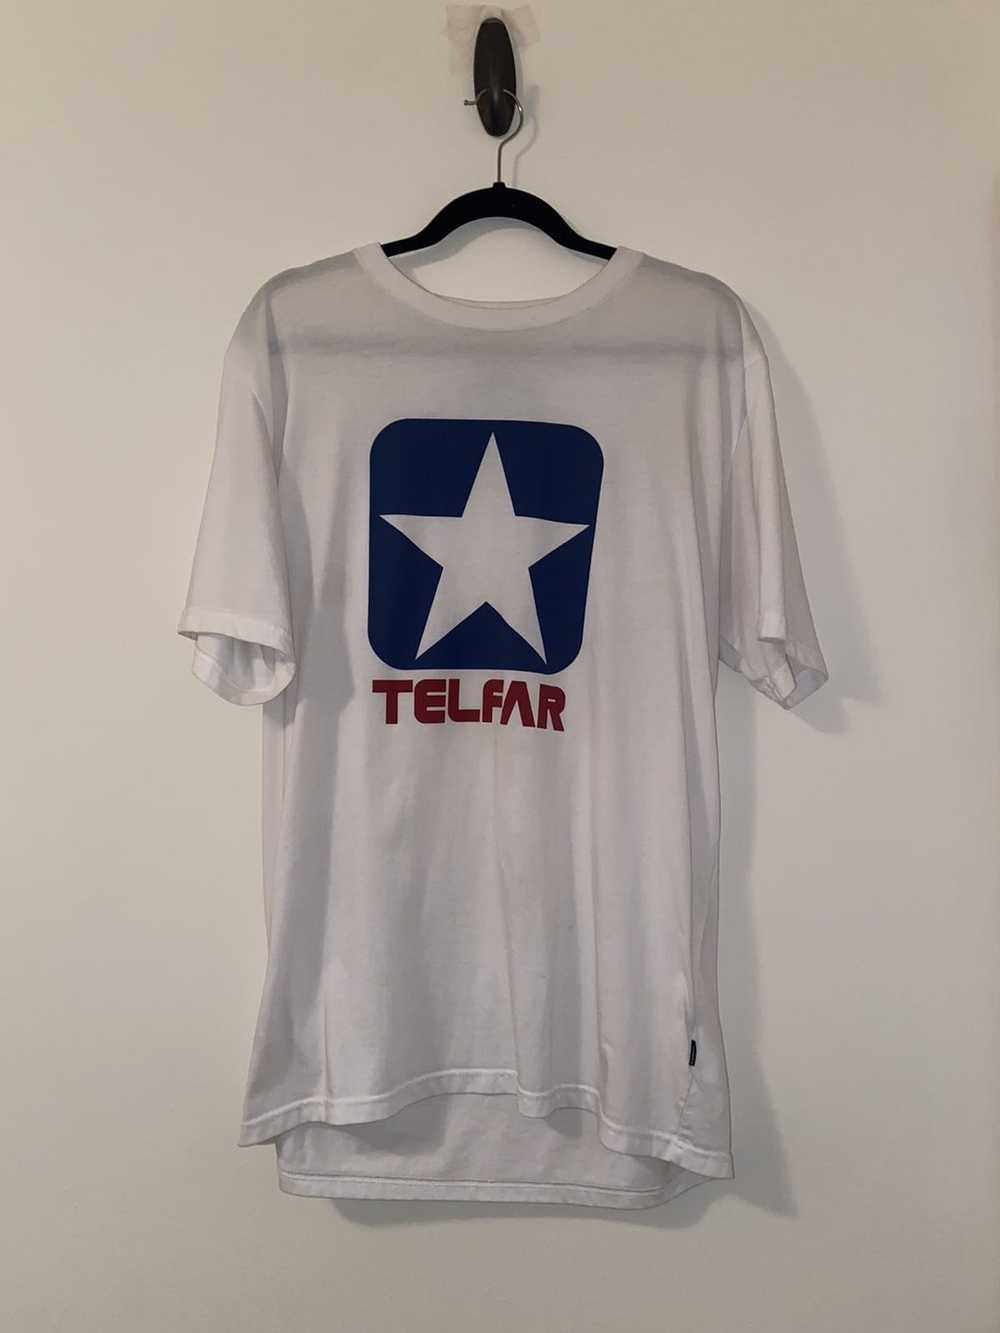 Telfar Telfar x Converse Logo Shirt - image 1